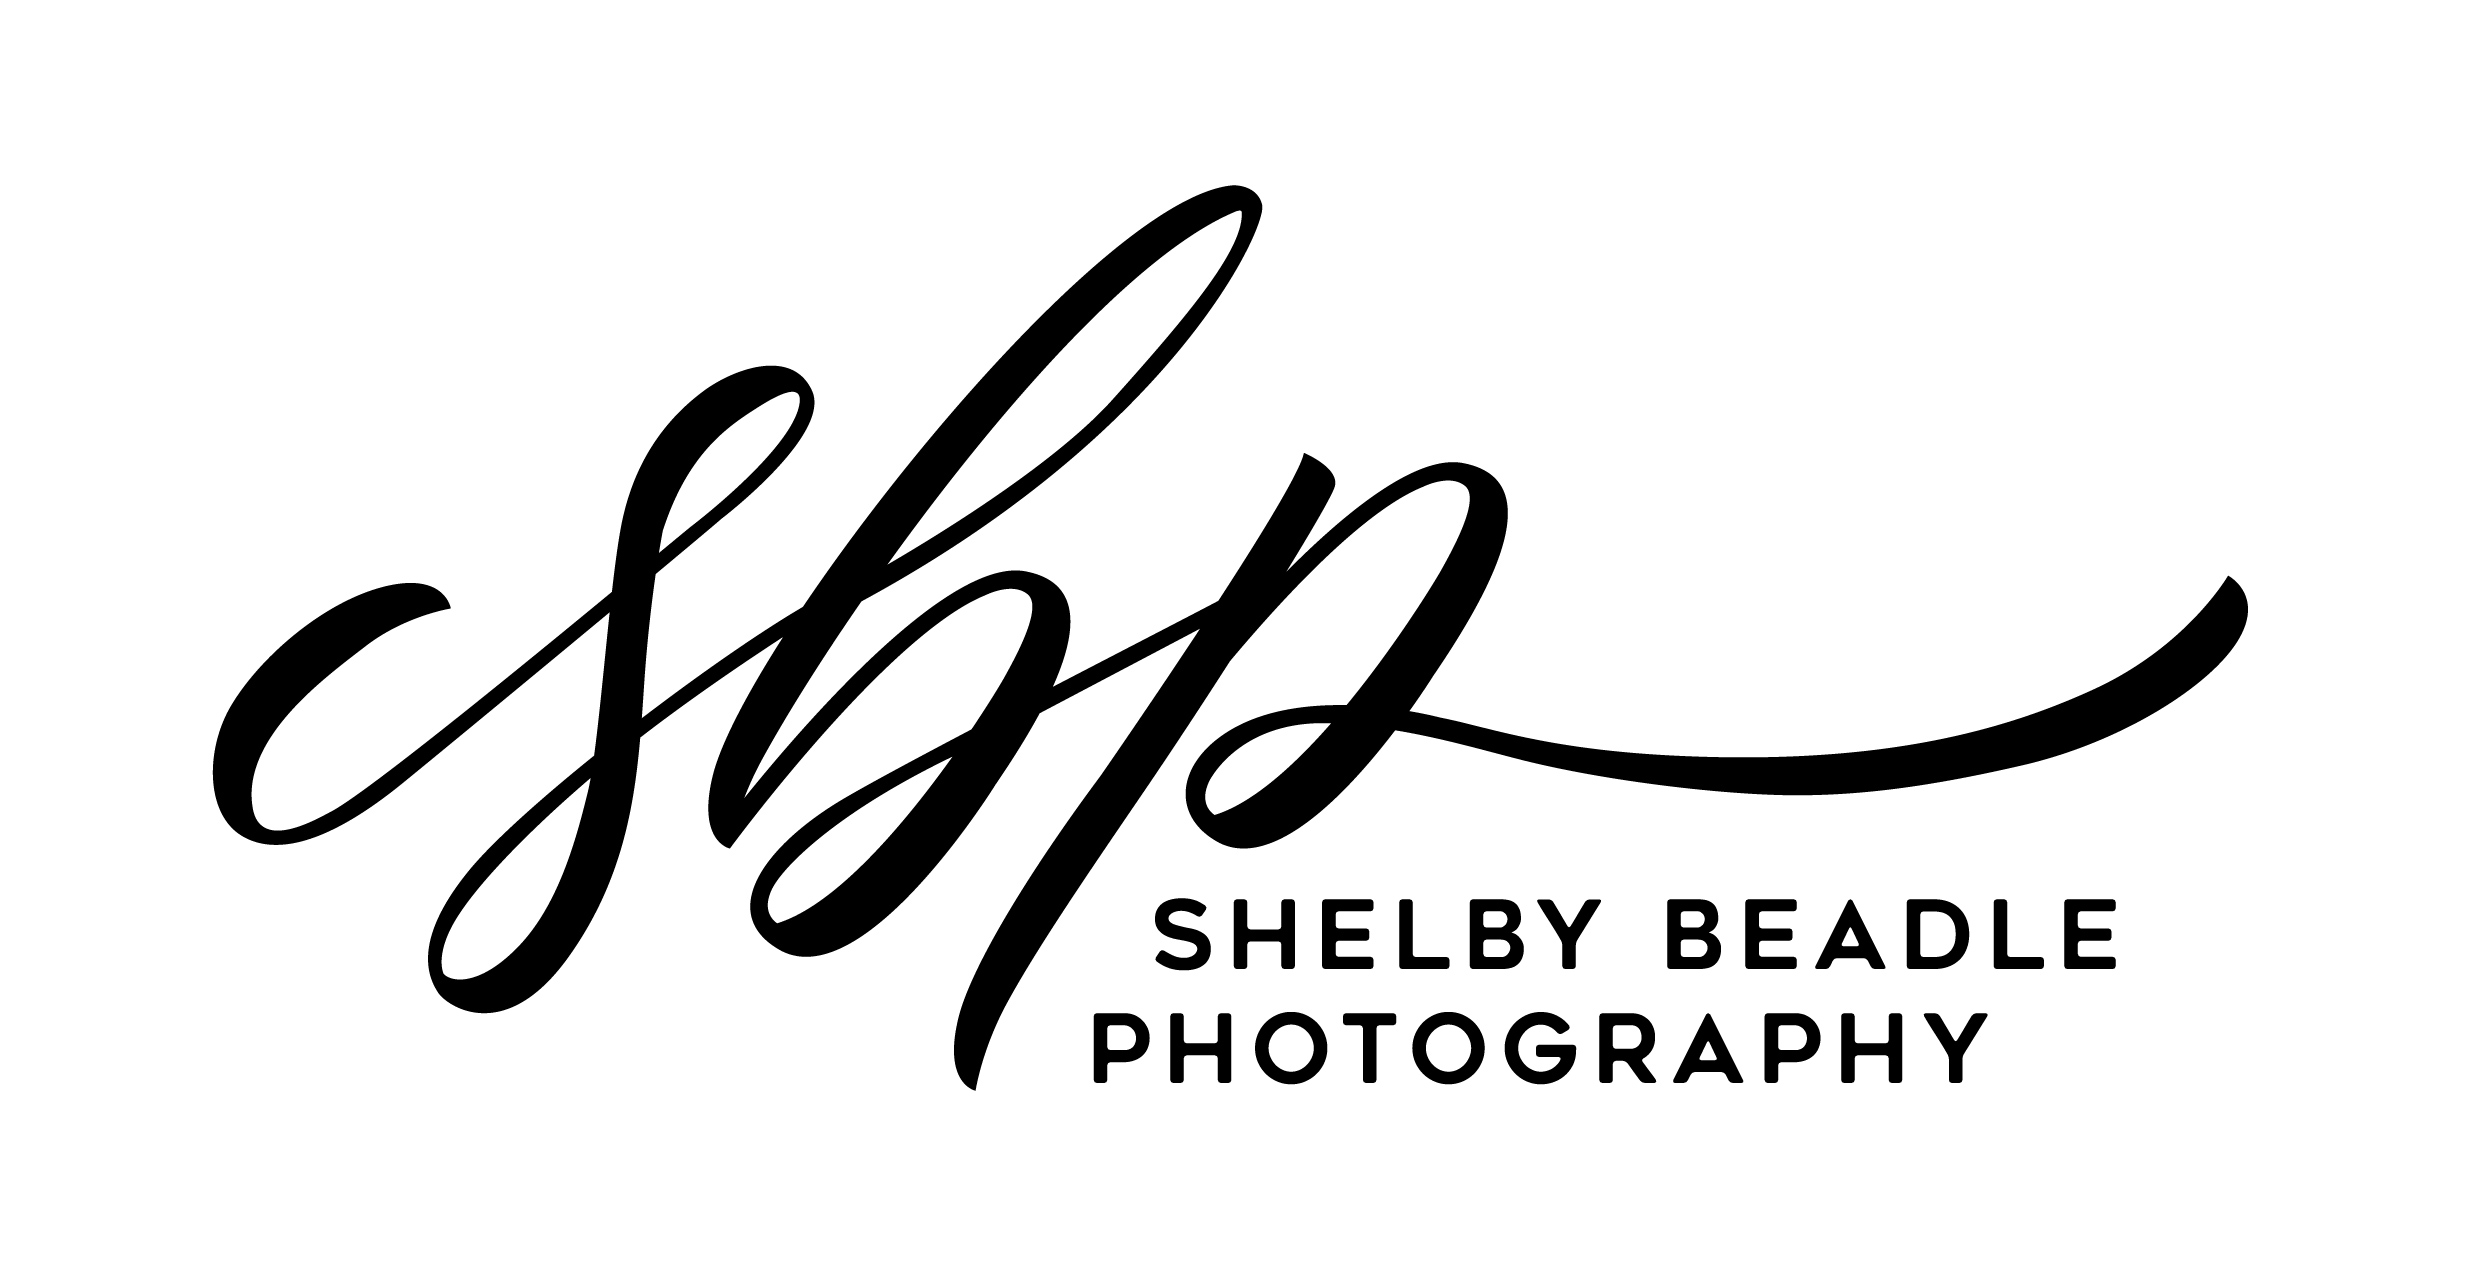 01 Shelby Beadle Photography - Full Logo-01.jpg